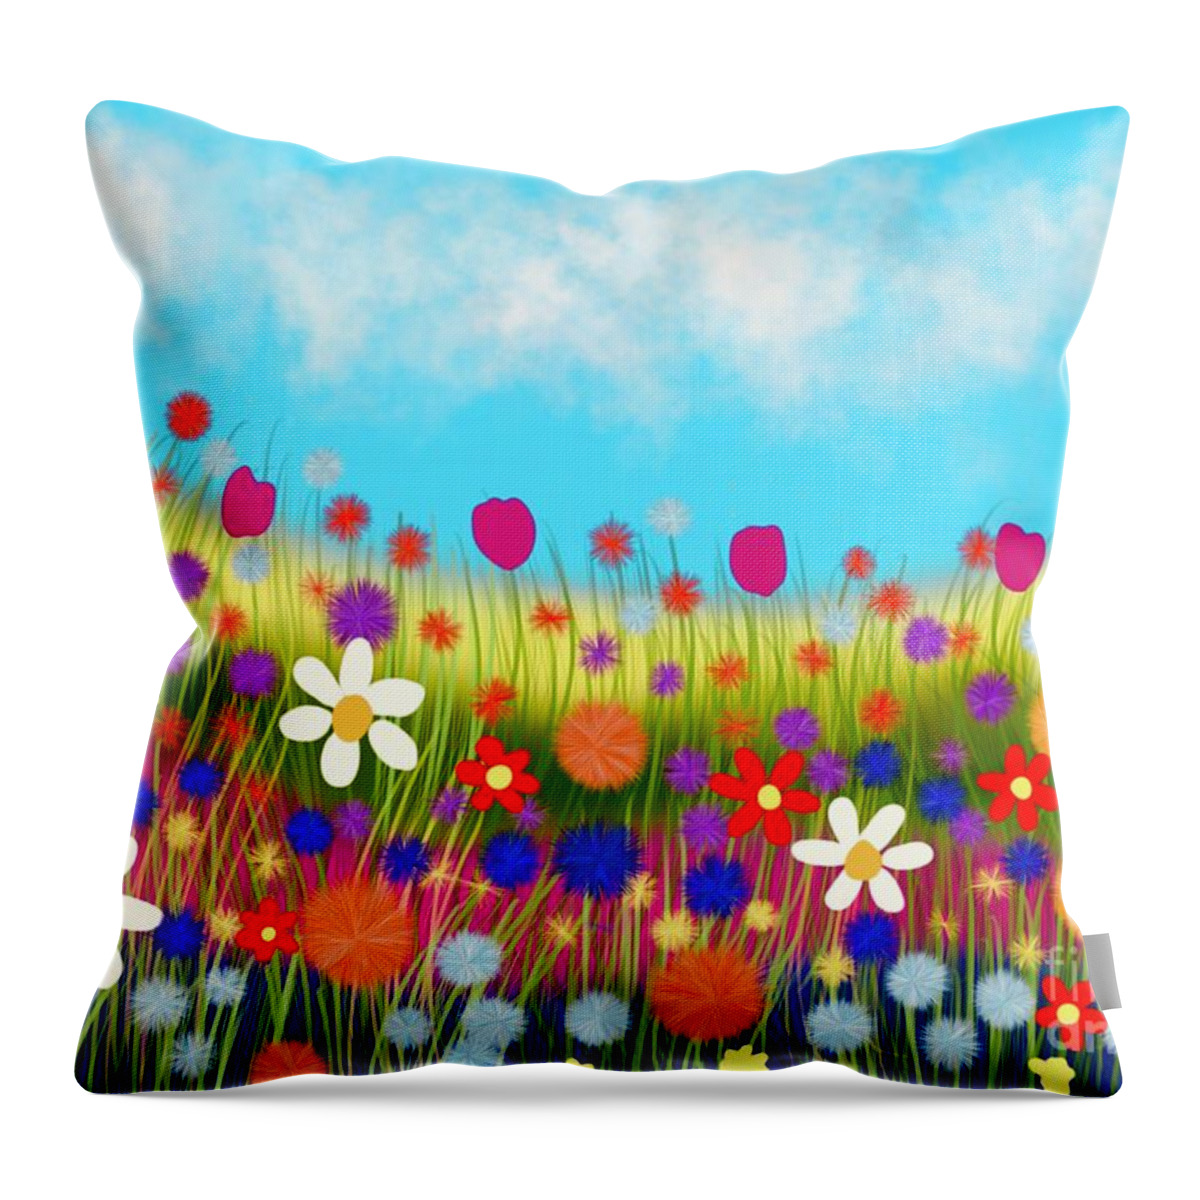 Wild Flowers Prints Throw Pillow featuring the digital art Wild flowers by Elaine Hayward